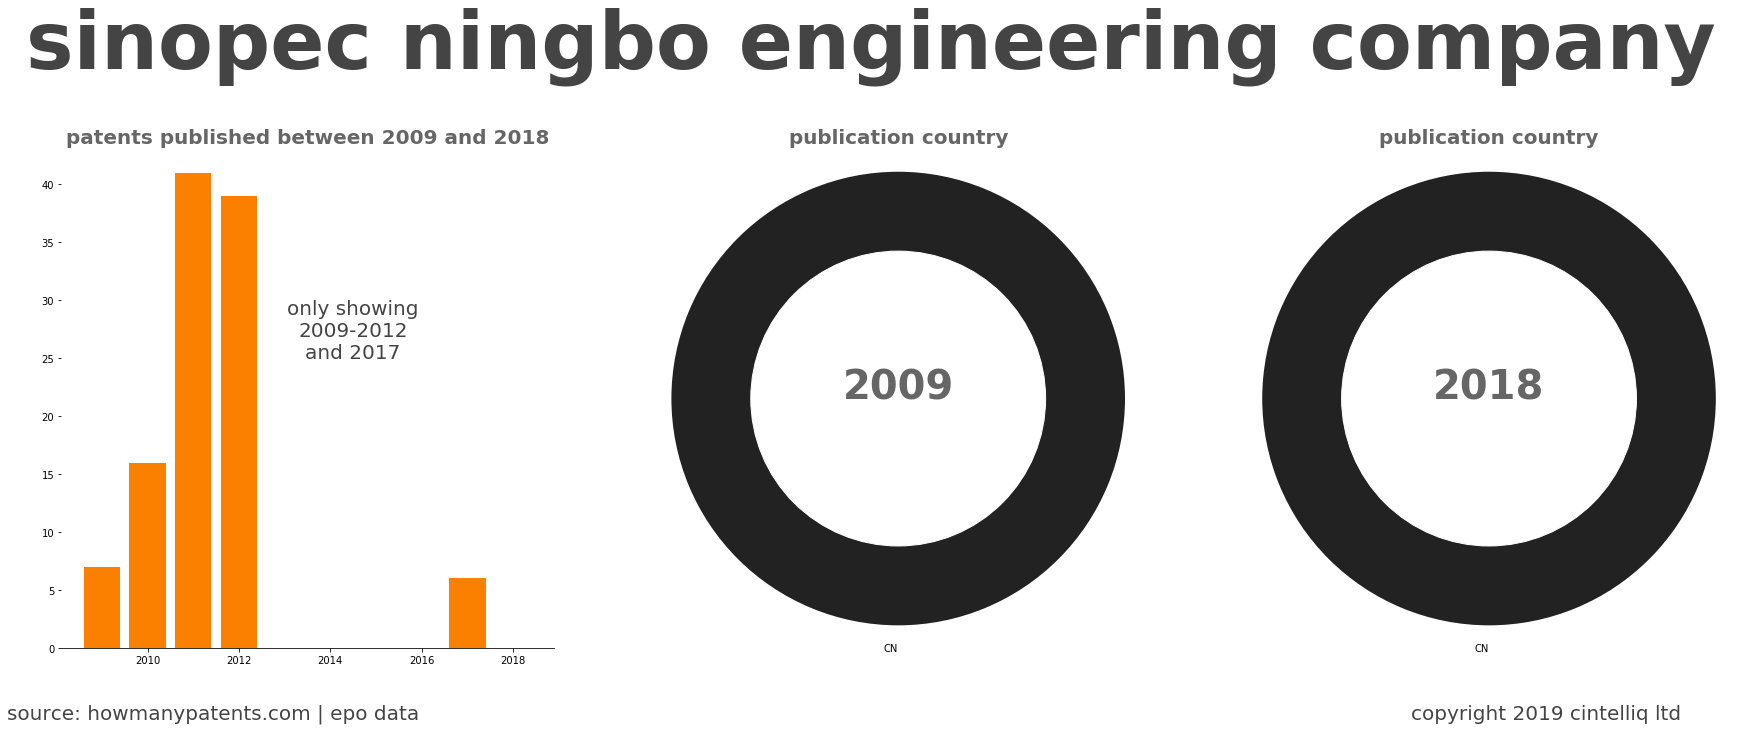 summary of patents for Sinopec Ningbo Engineering Company